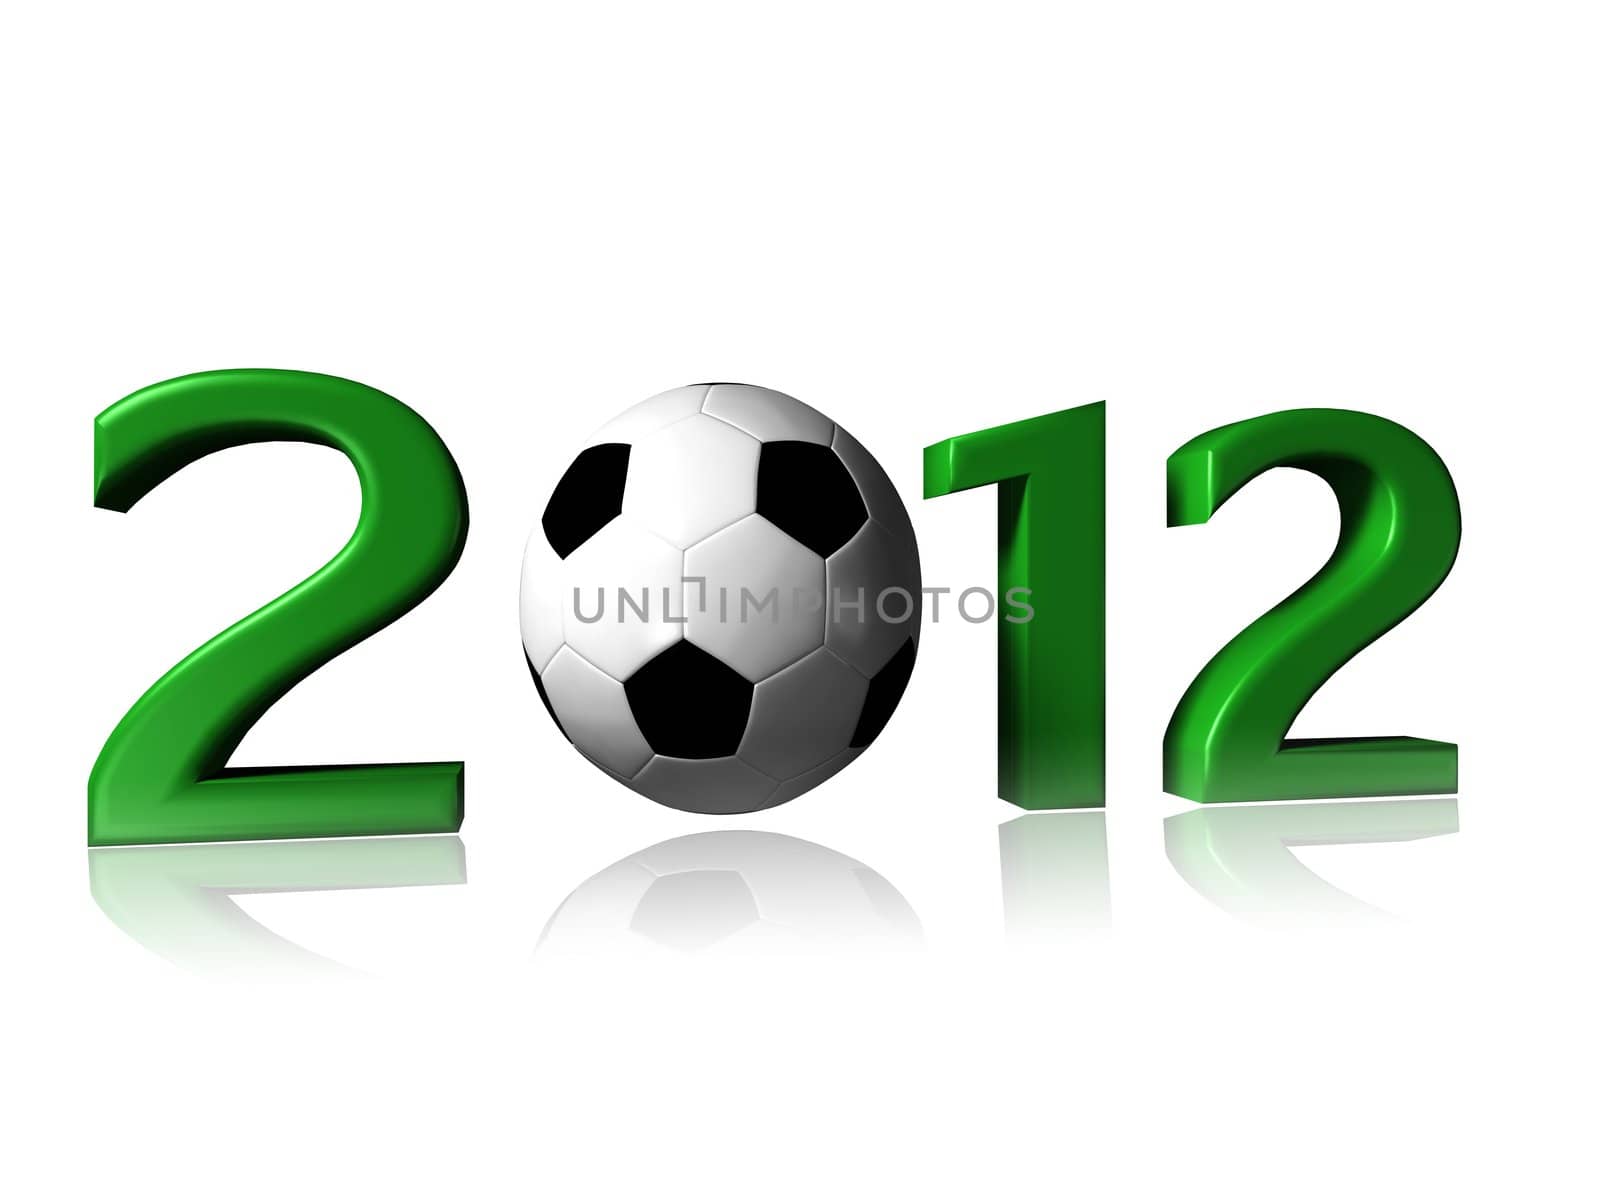 Big 2012 soccer logo by shkyo30